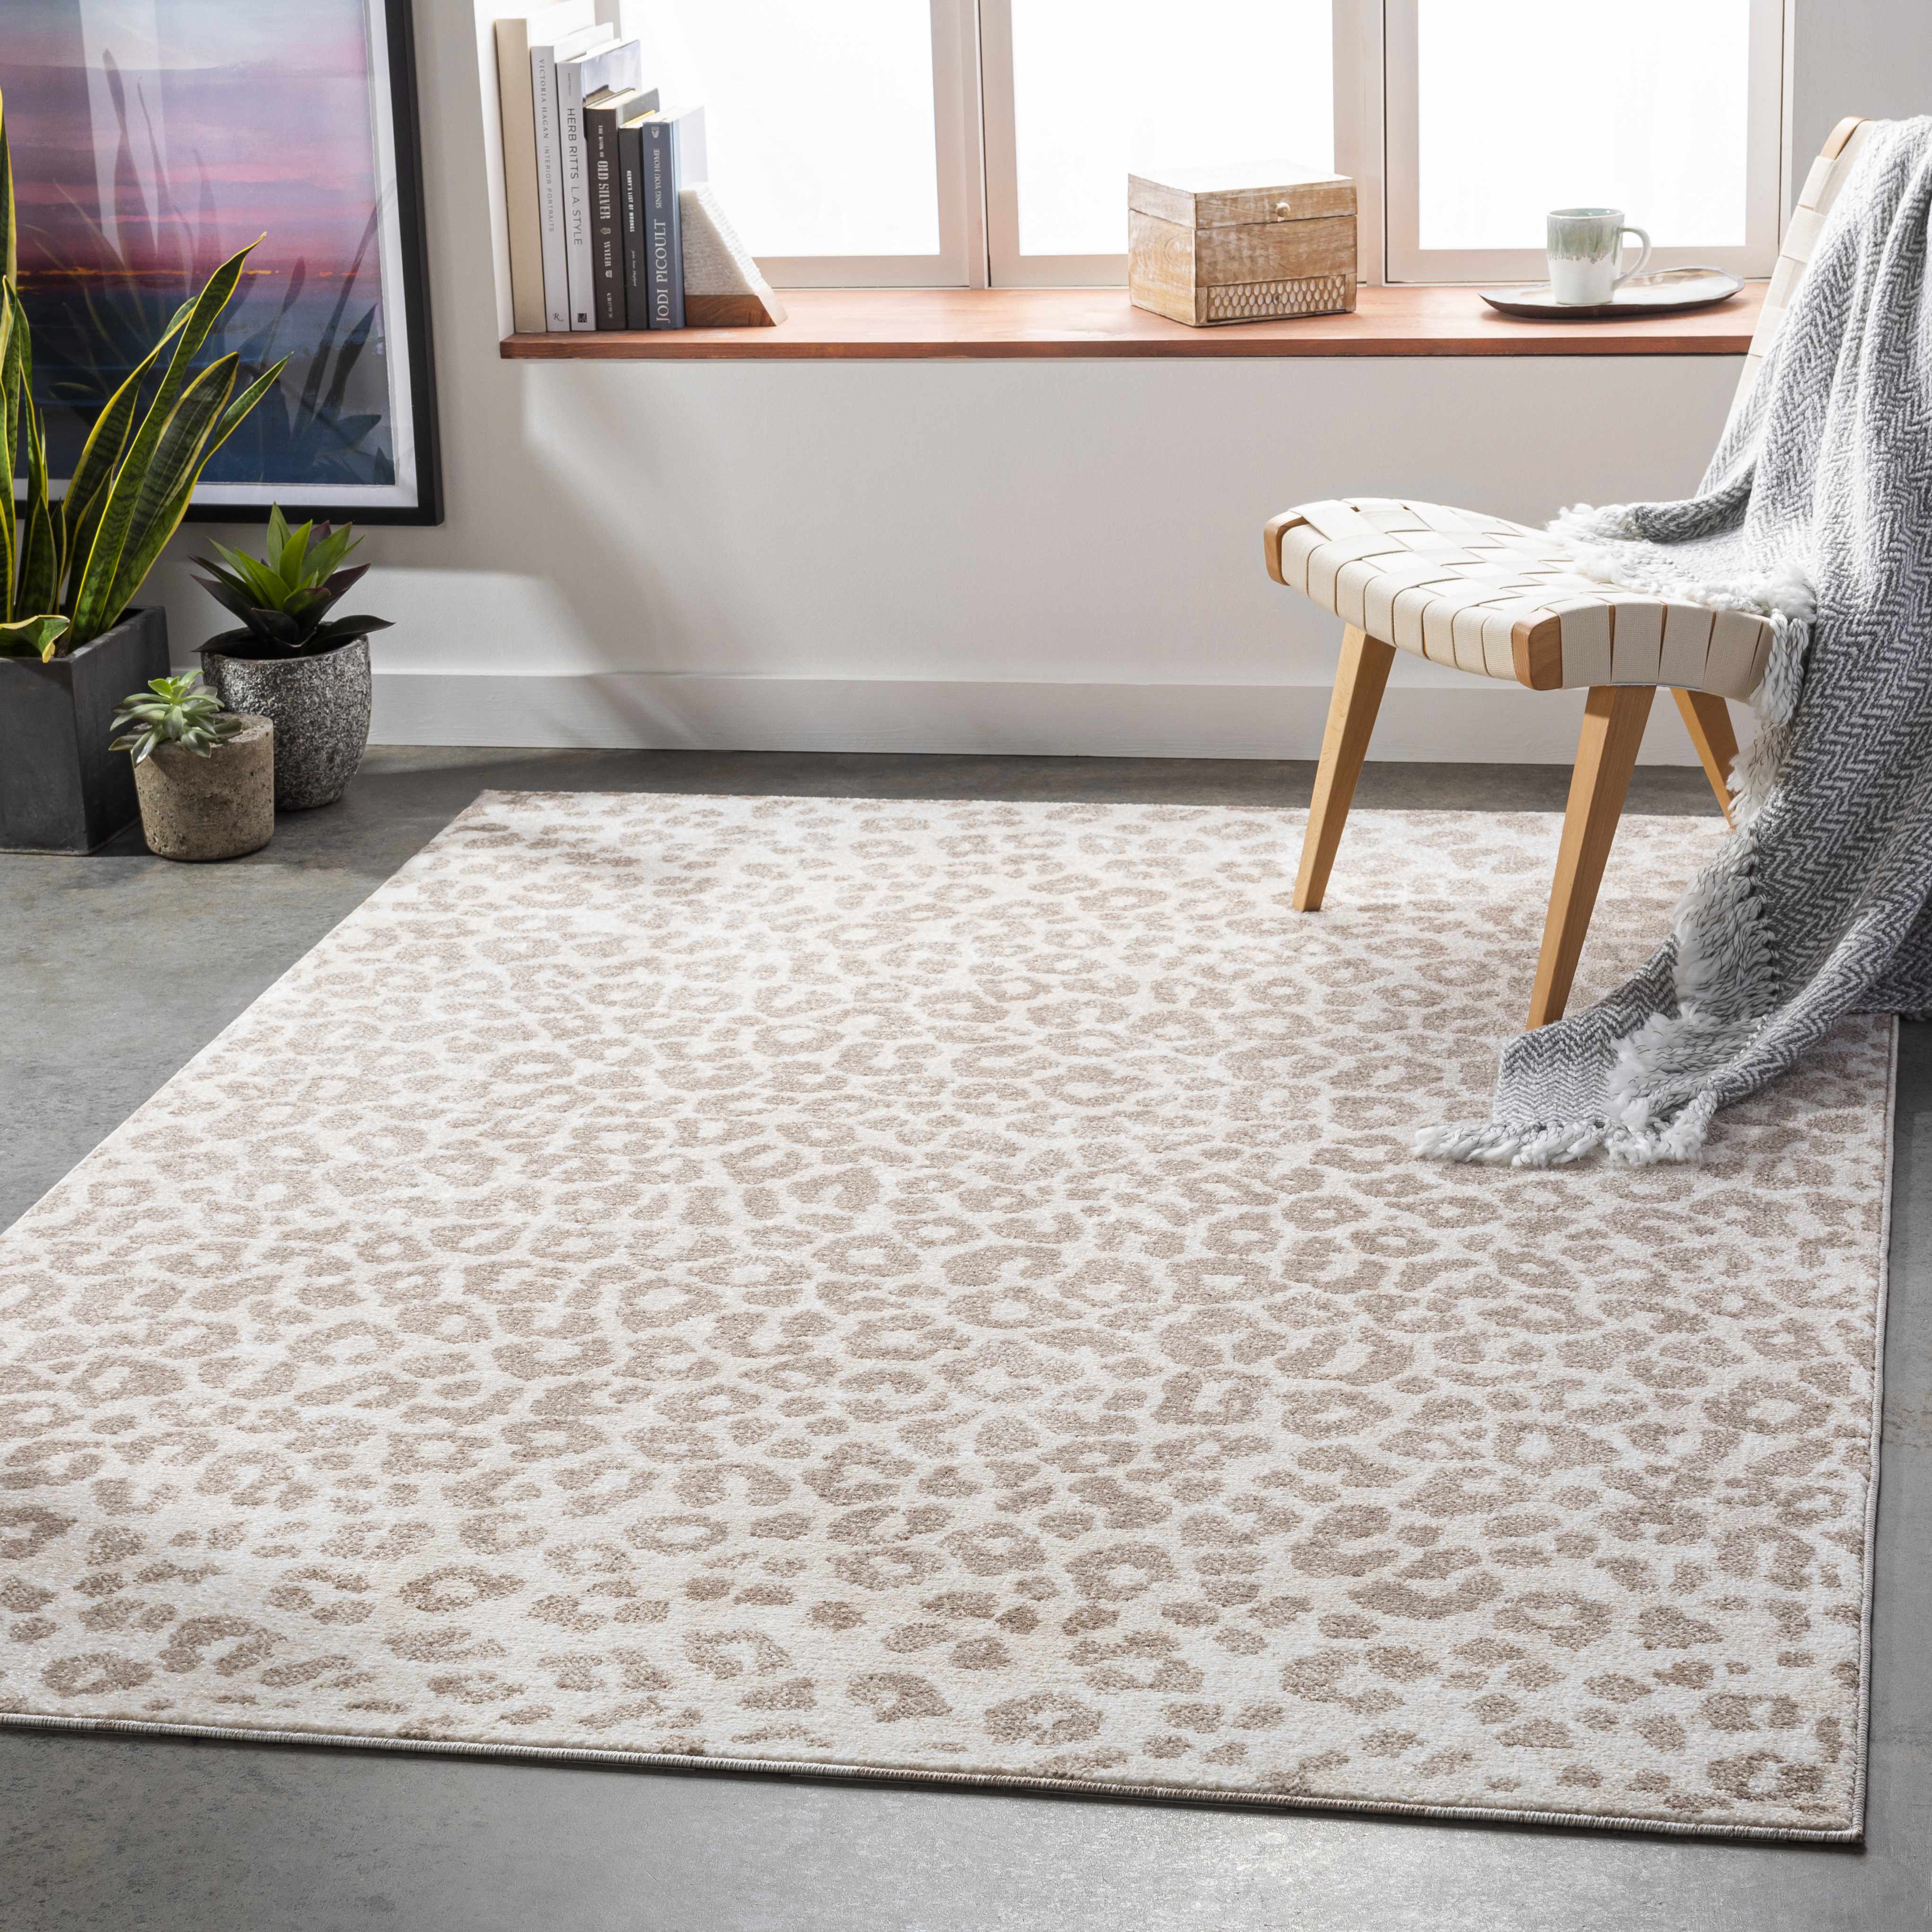 Leopard Print Round Area Rug 4ft Washable Outdoor Indoor Carpet R